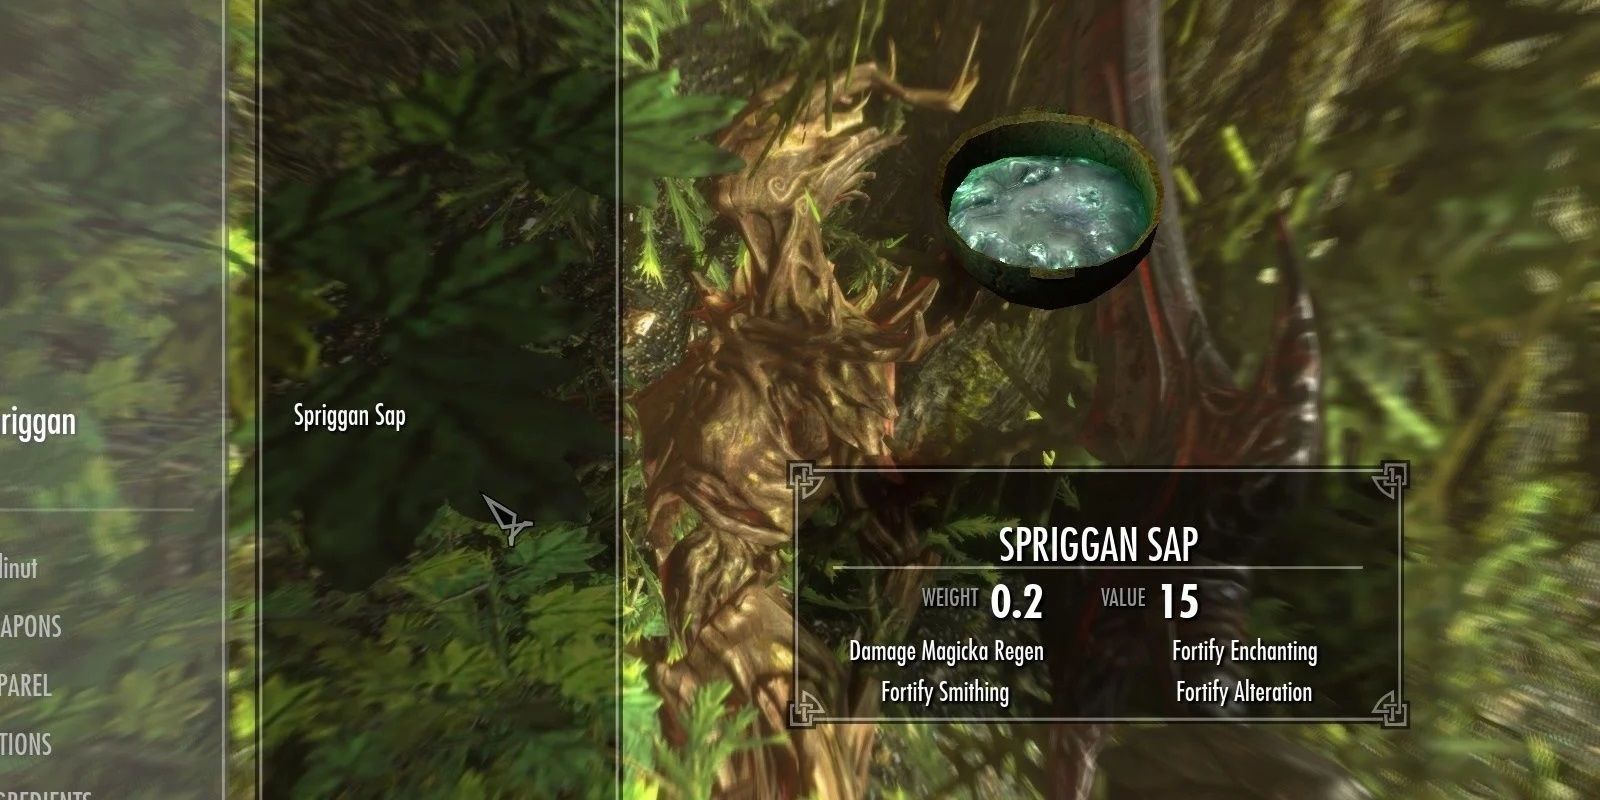 Skyrim Spriggan Sap Selected In The Inventory View